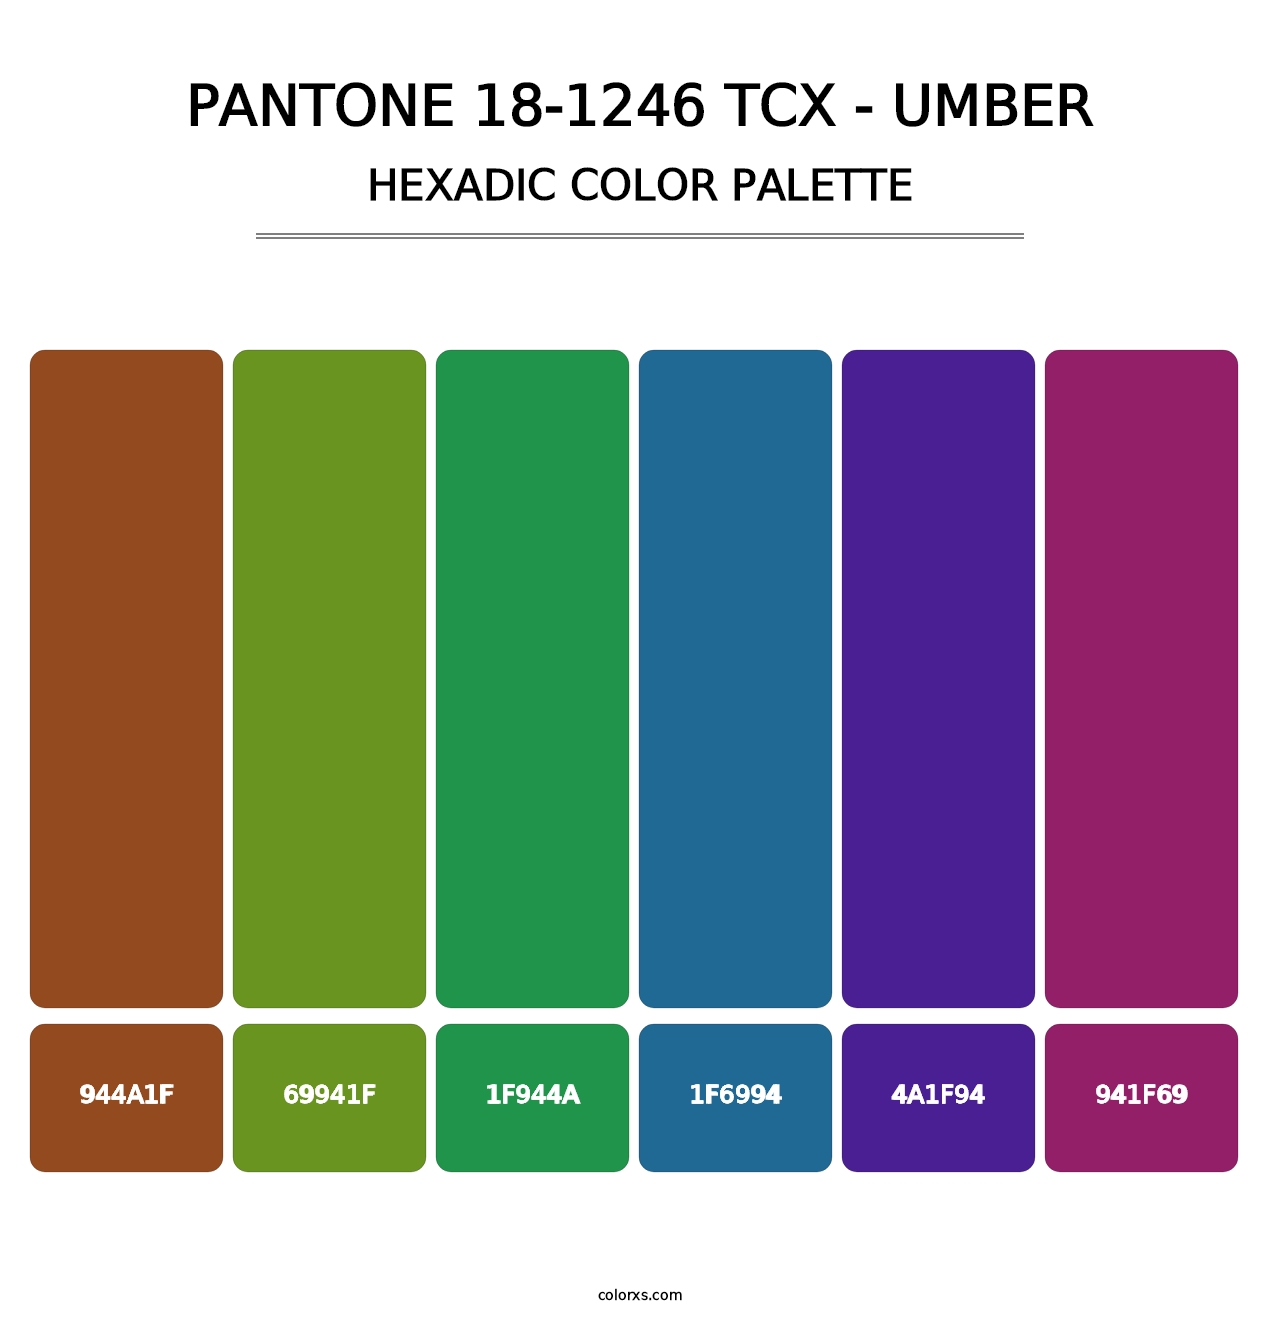 PANTONE 18-1246 TCX - Umber - Hexadic Color Palette